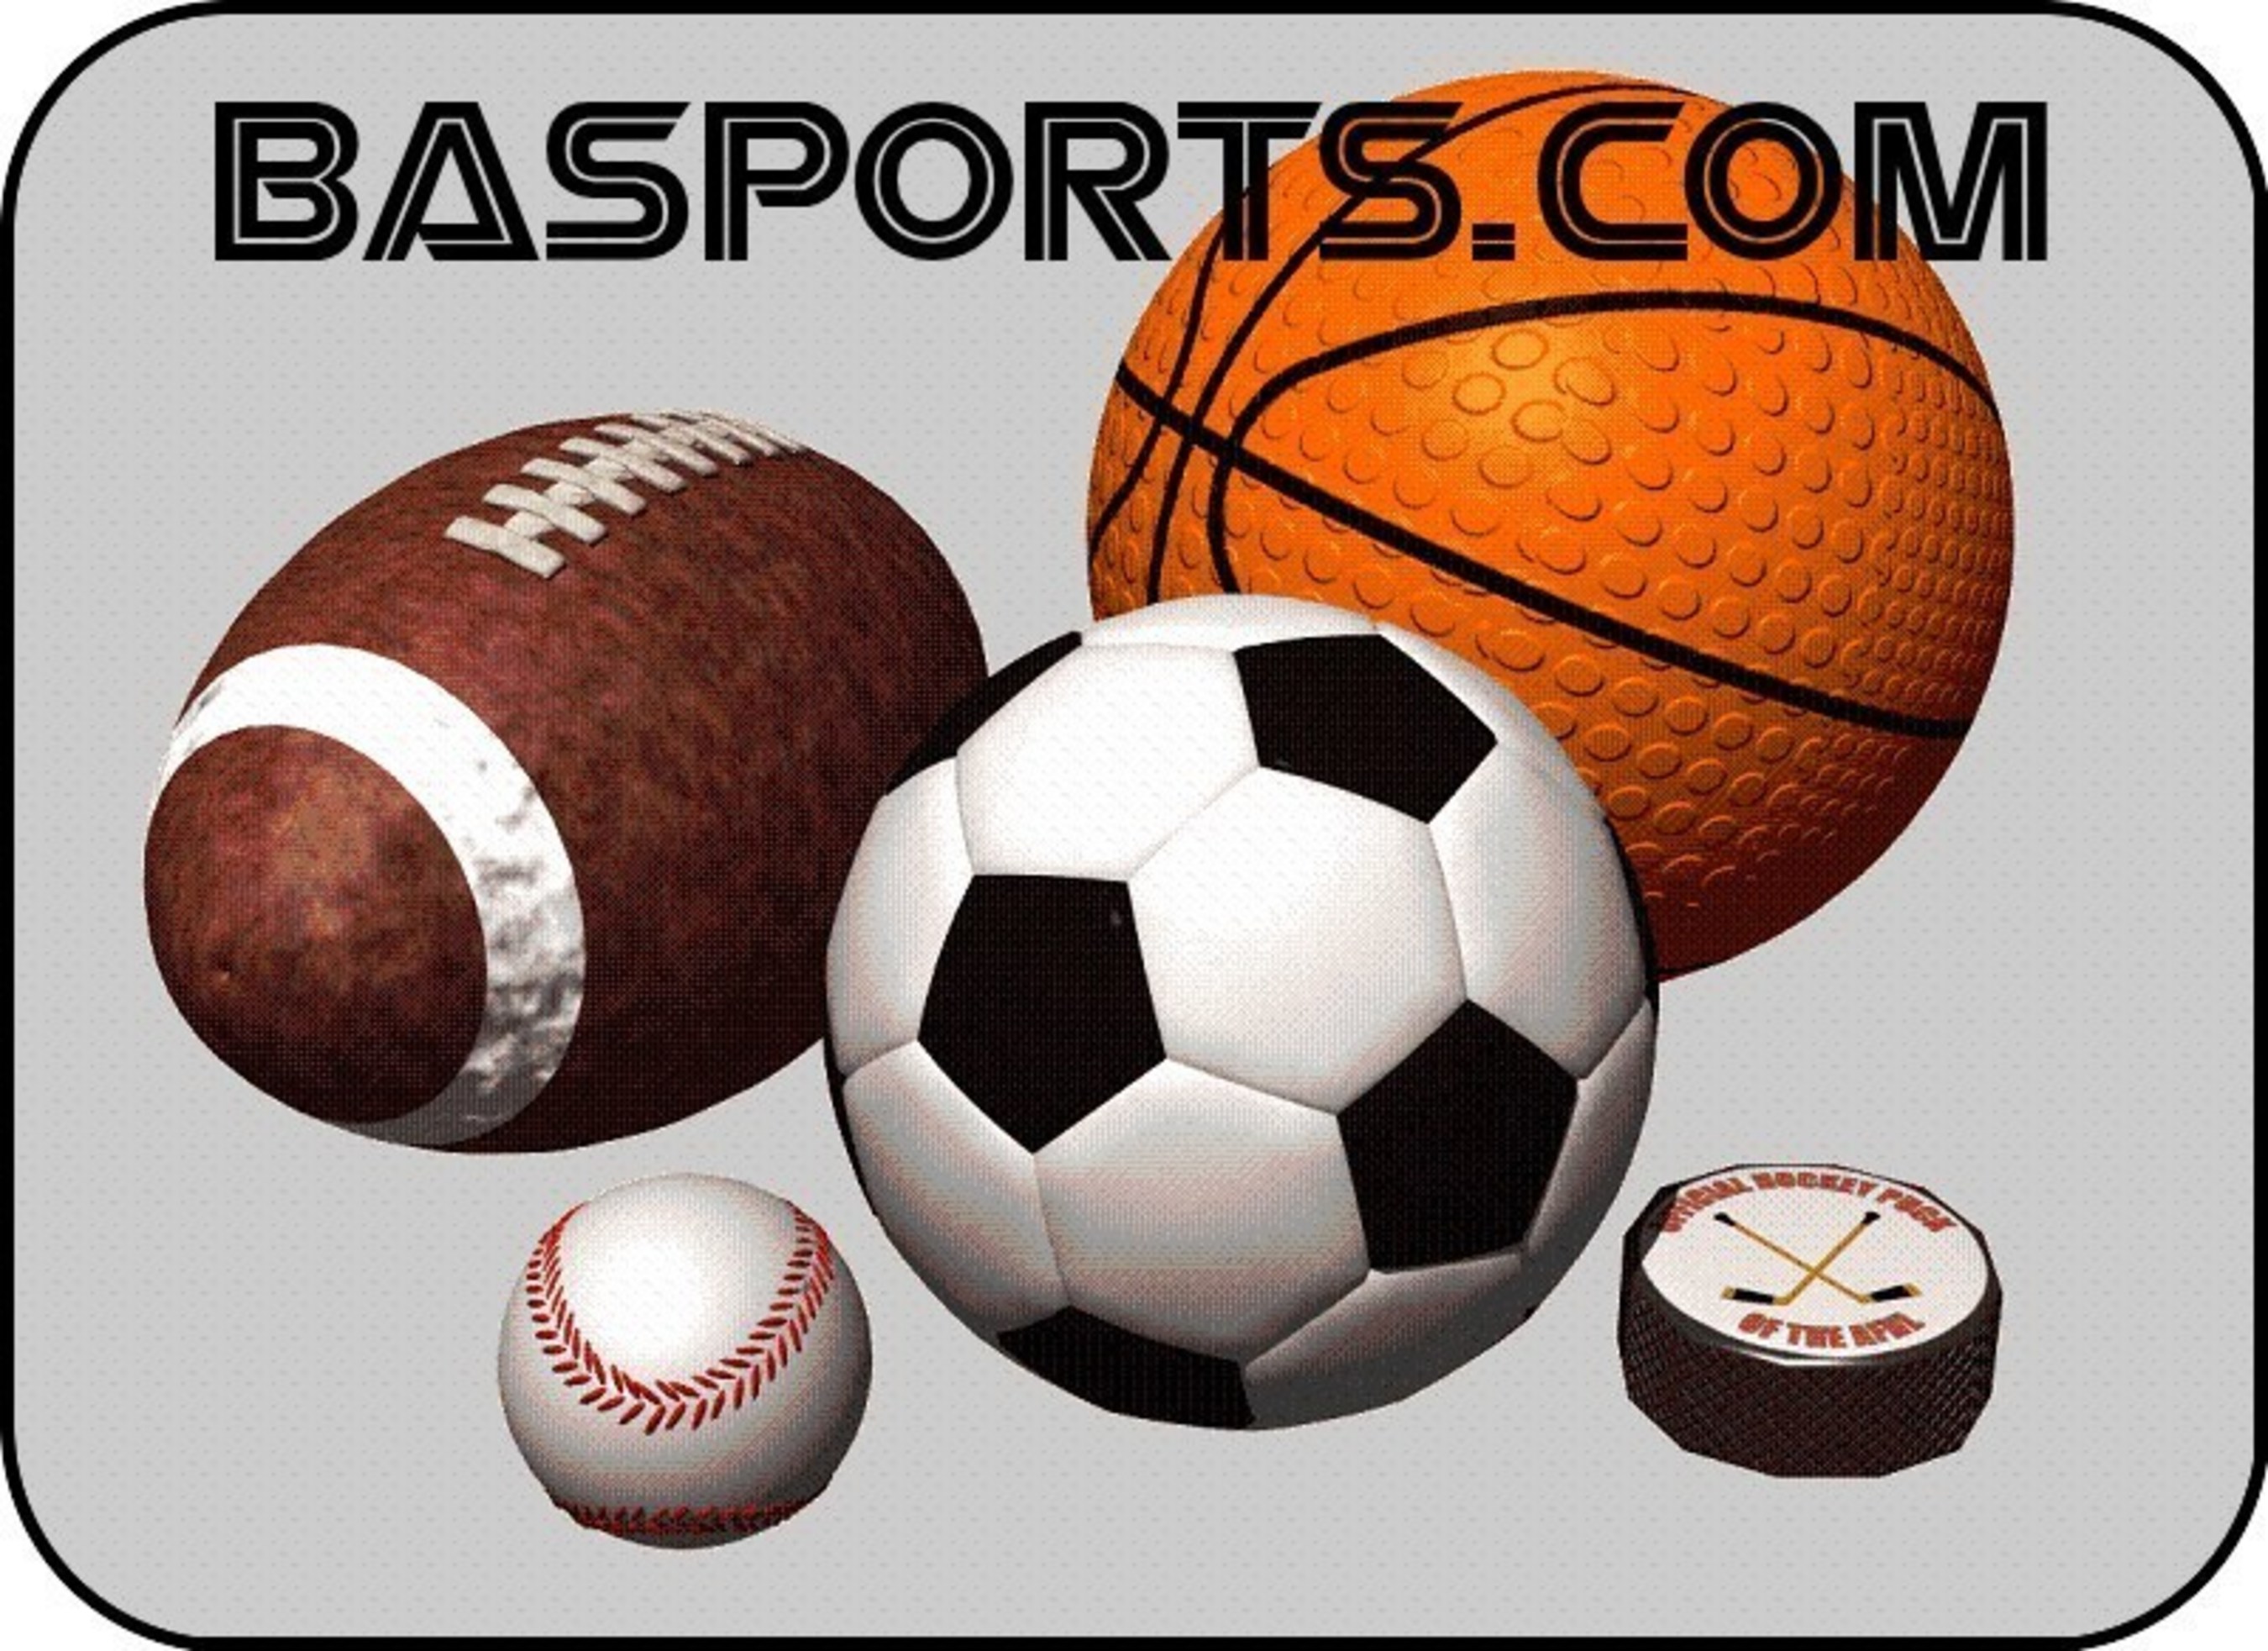 BASports.com: the world's premier sports information service